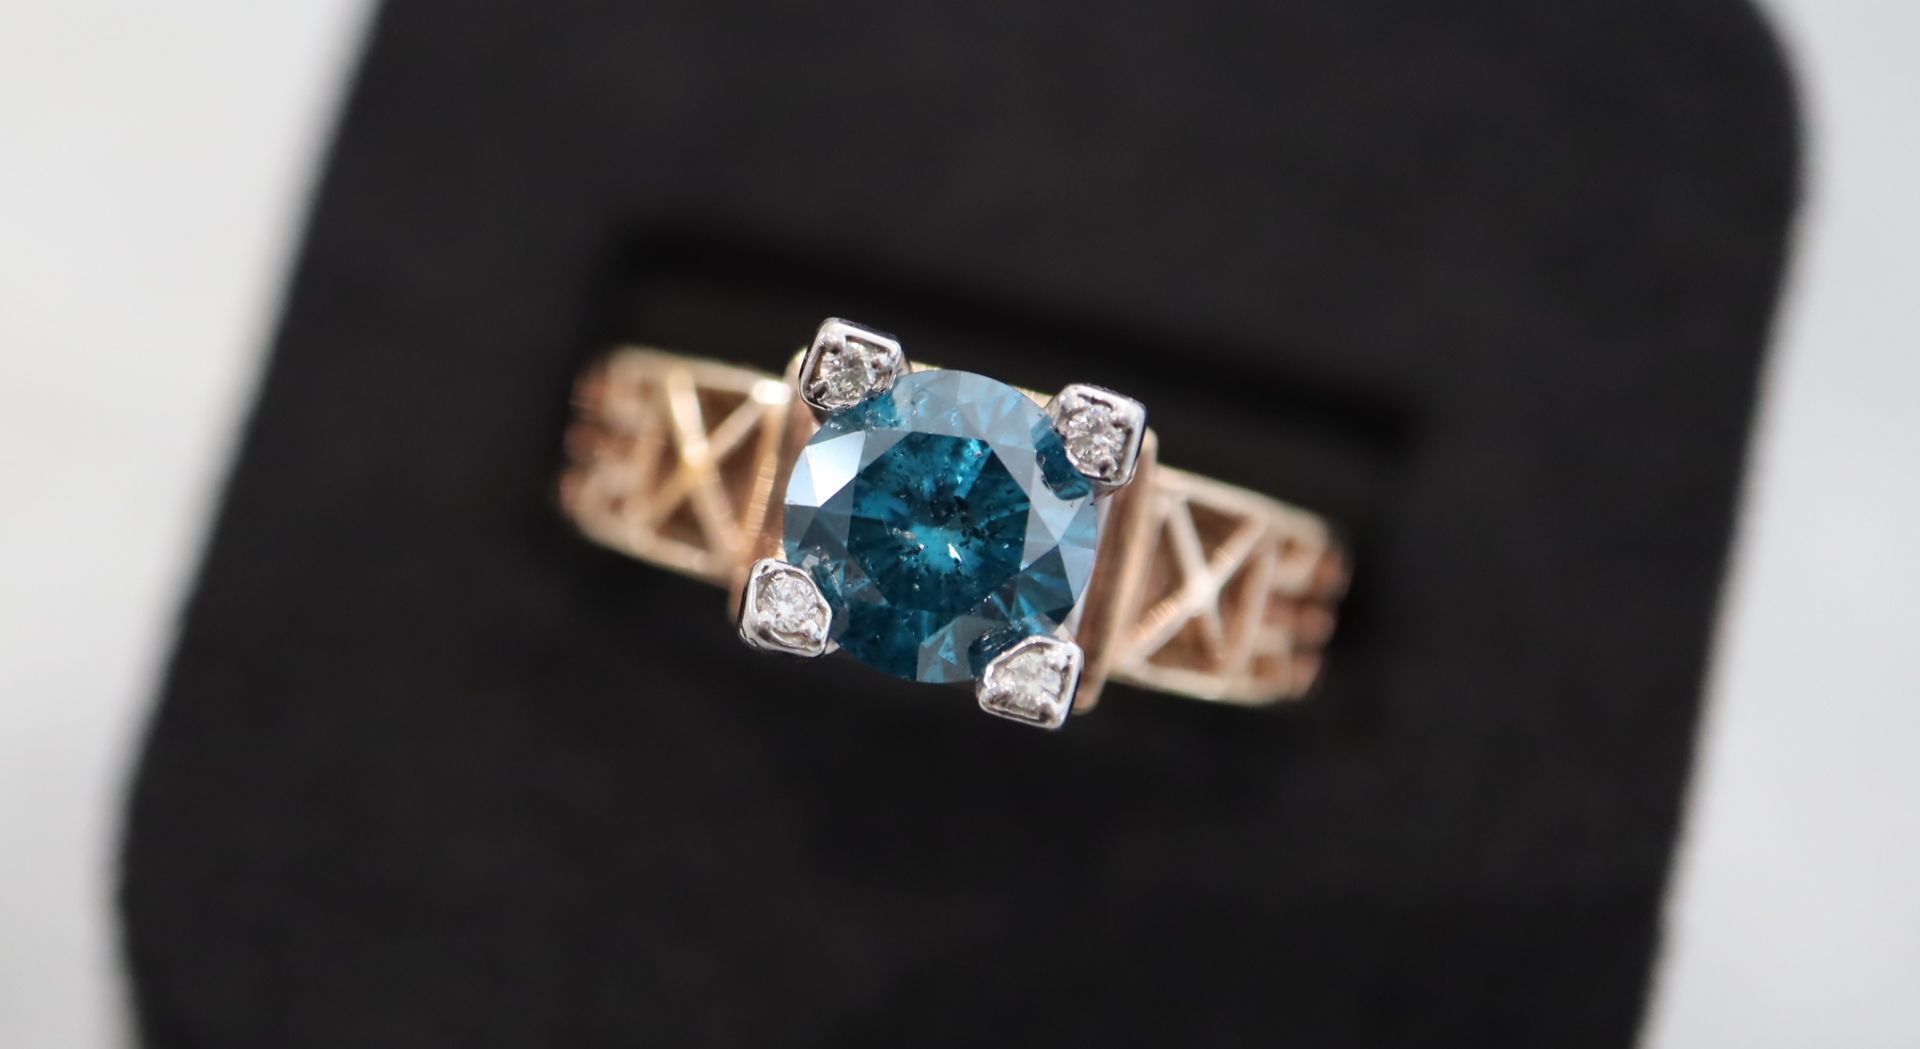 BLUE DIAMOND RING - 14K ROSE GOLD (UK SIZE - M)